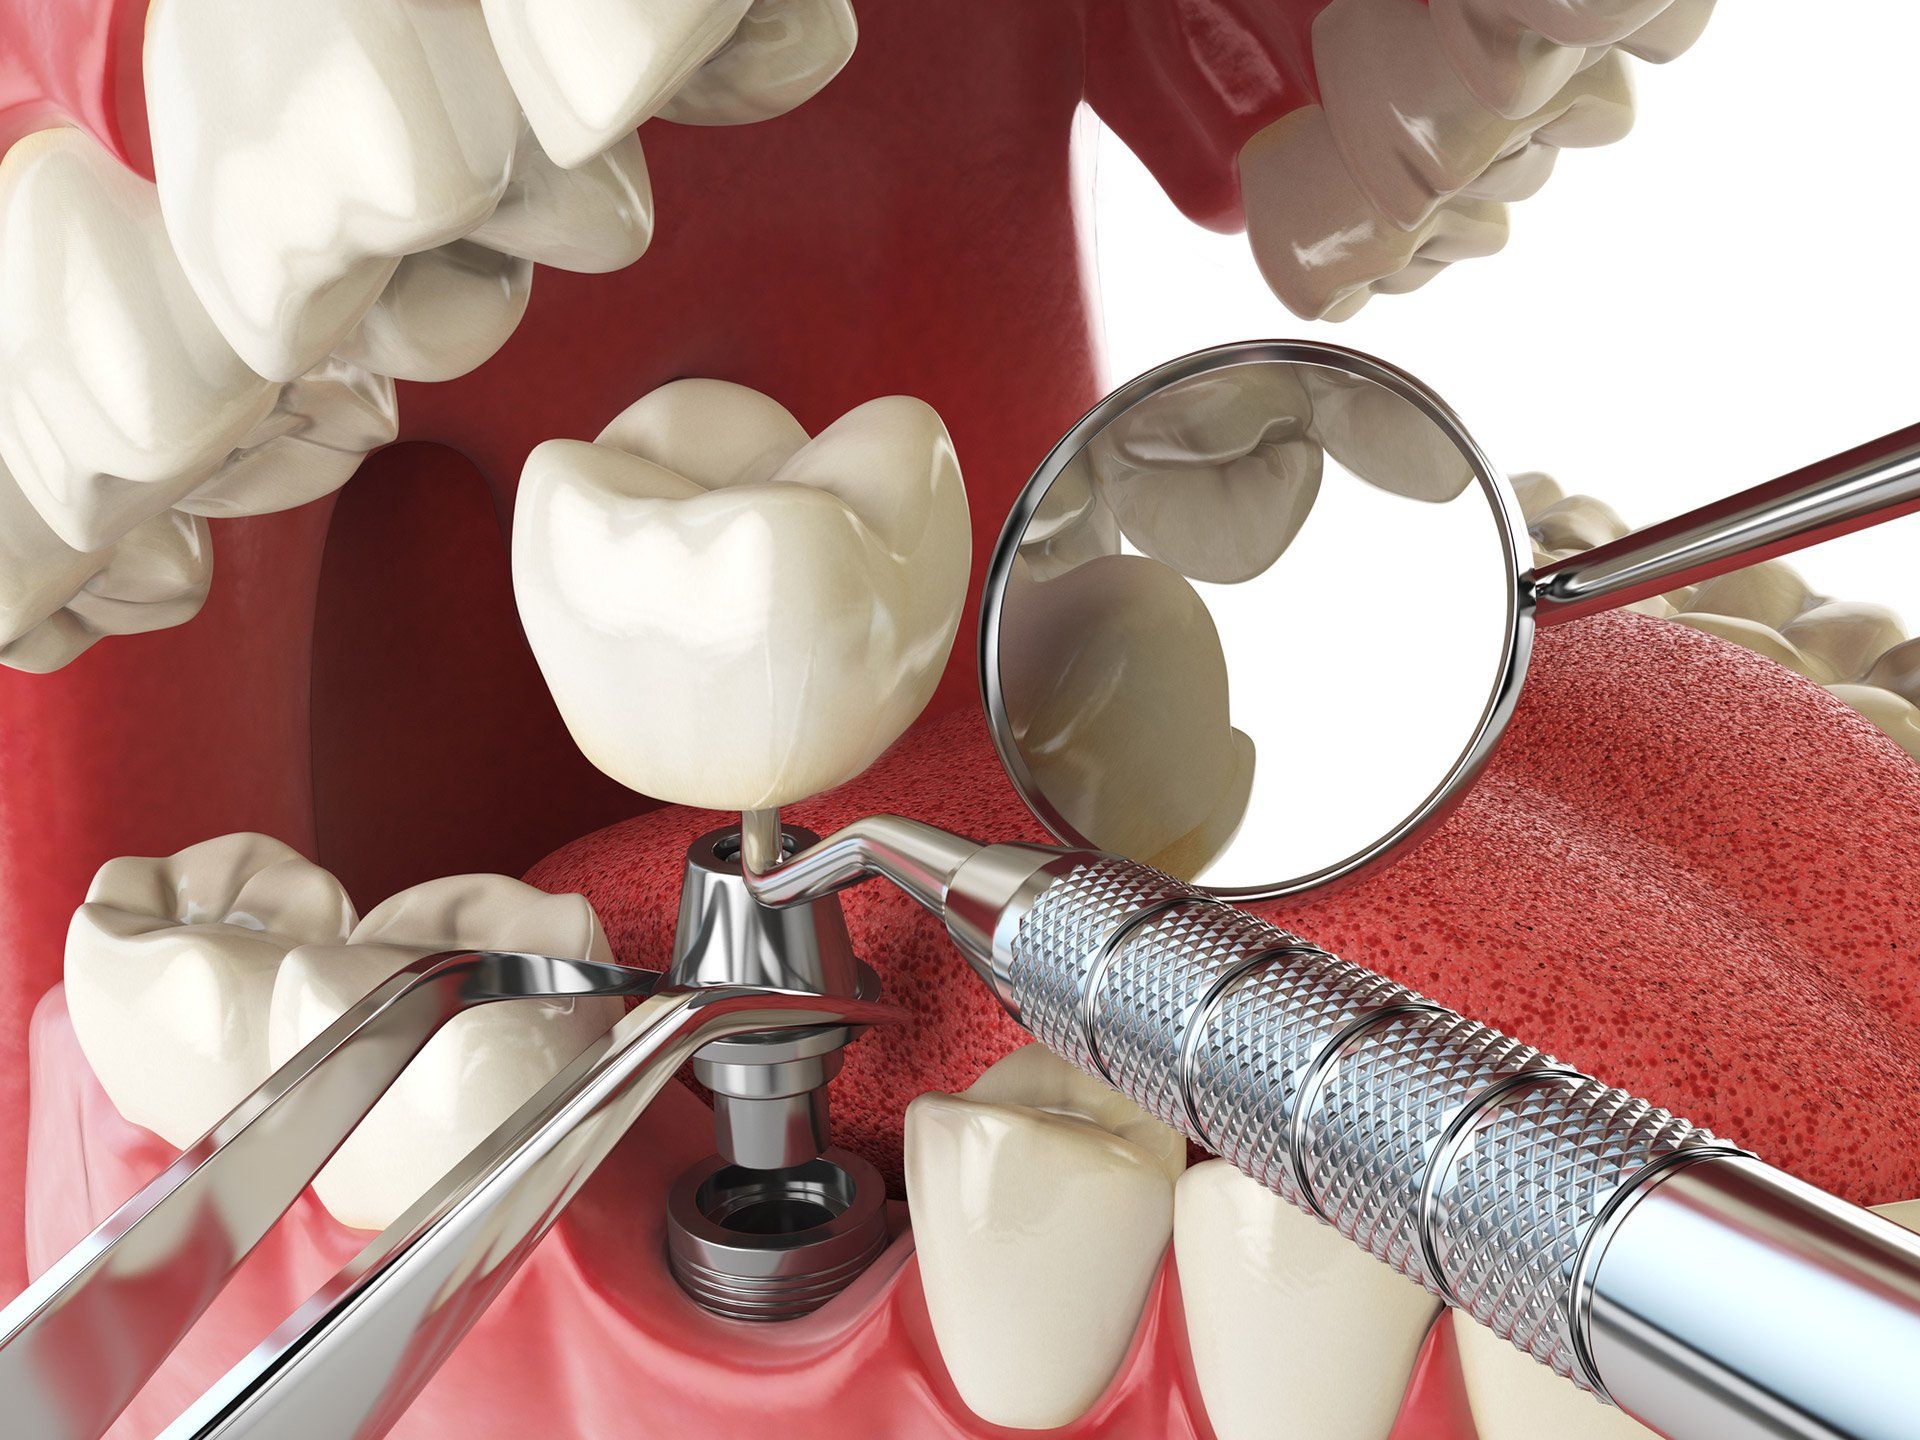 dental implants - Glenville Smiles -Schenectady, NY